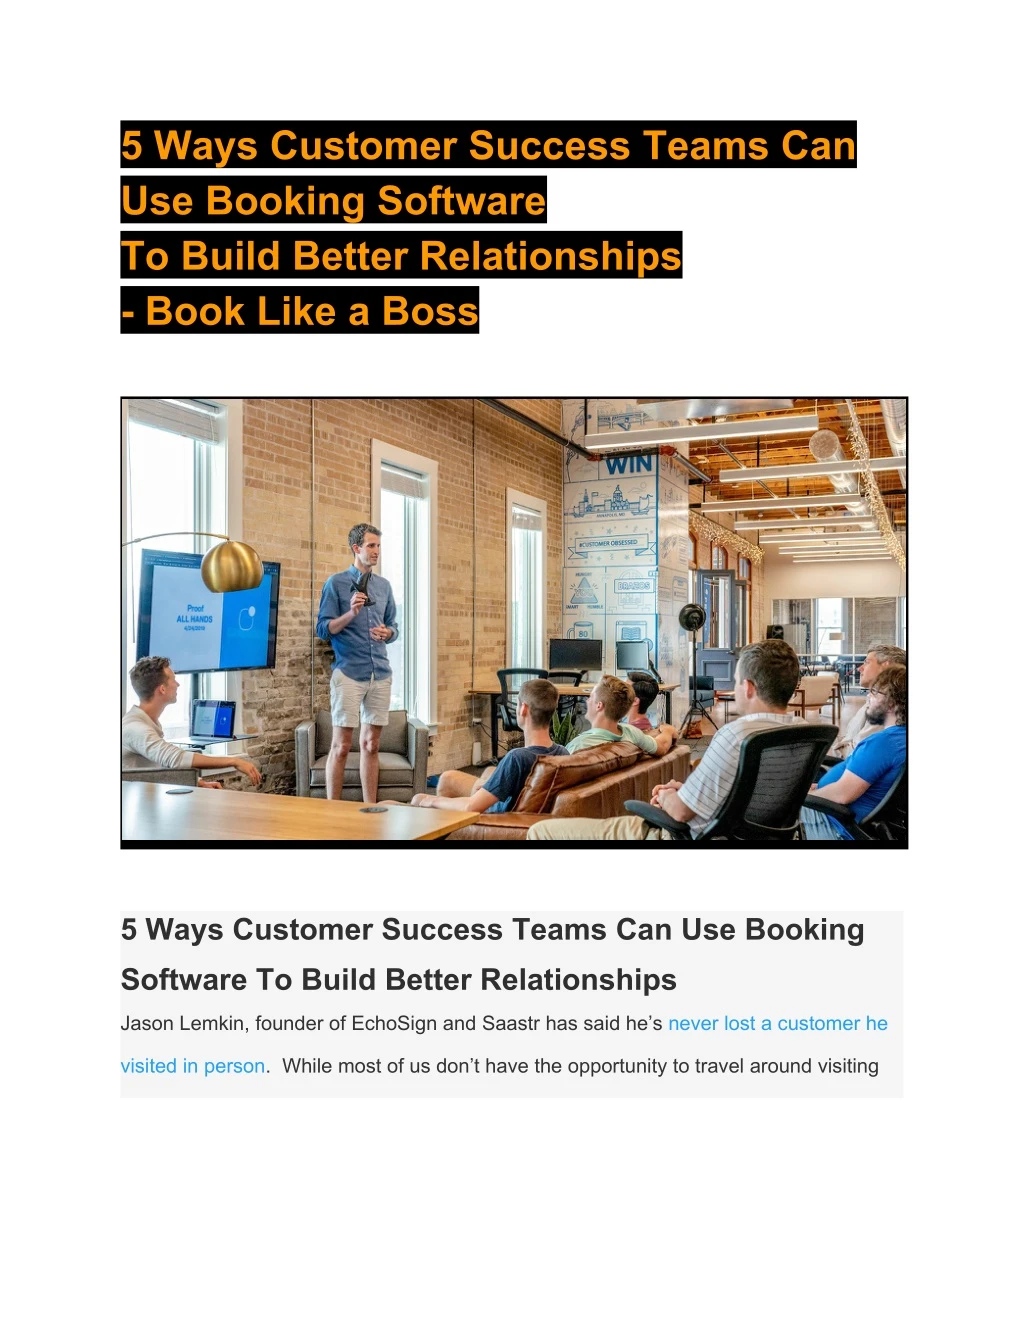 5 ways customer success teams can use booking